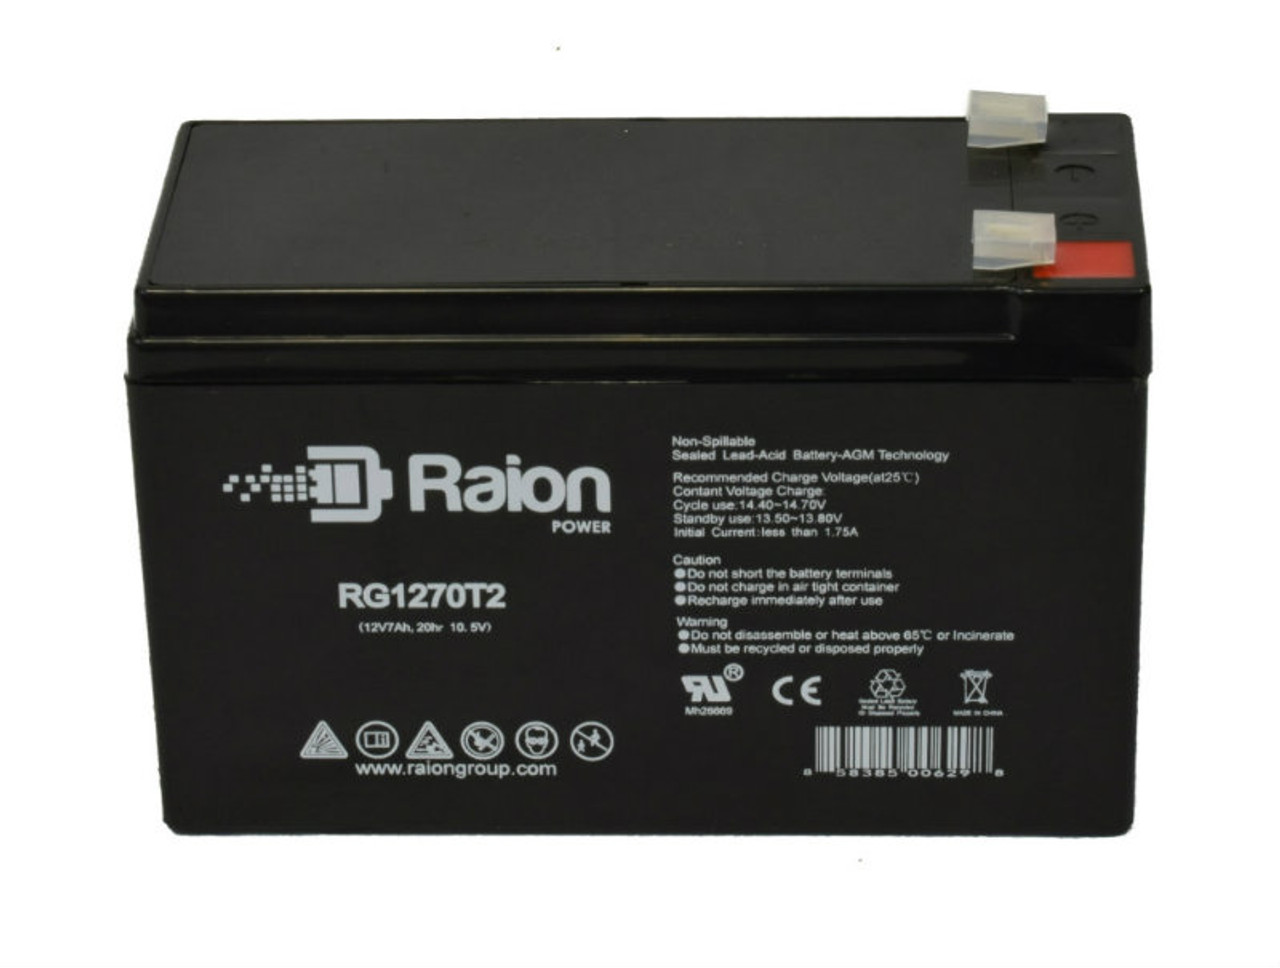 Raion Power RG1270T1 12V 7Ah Lead Acid Battery for Napco Alarms